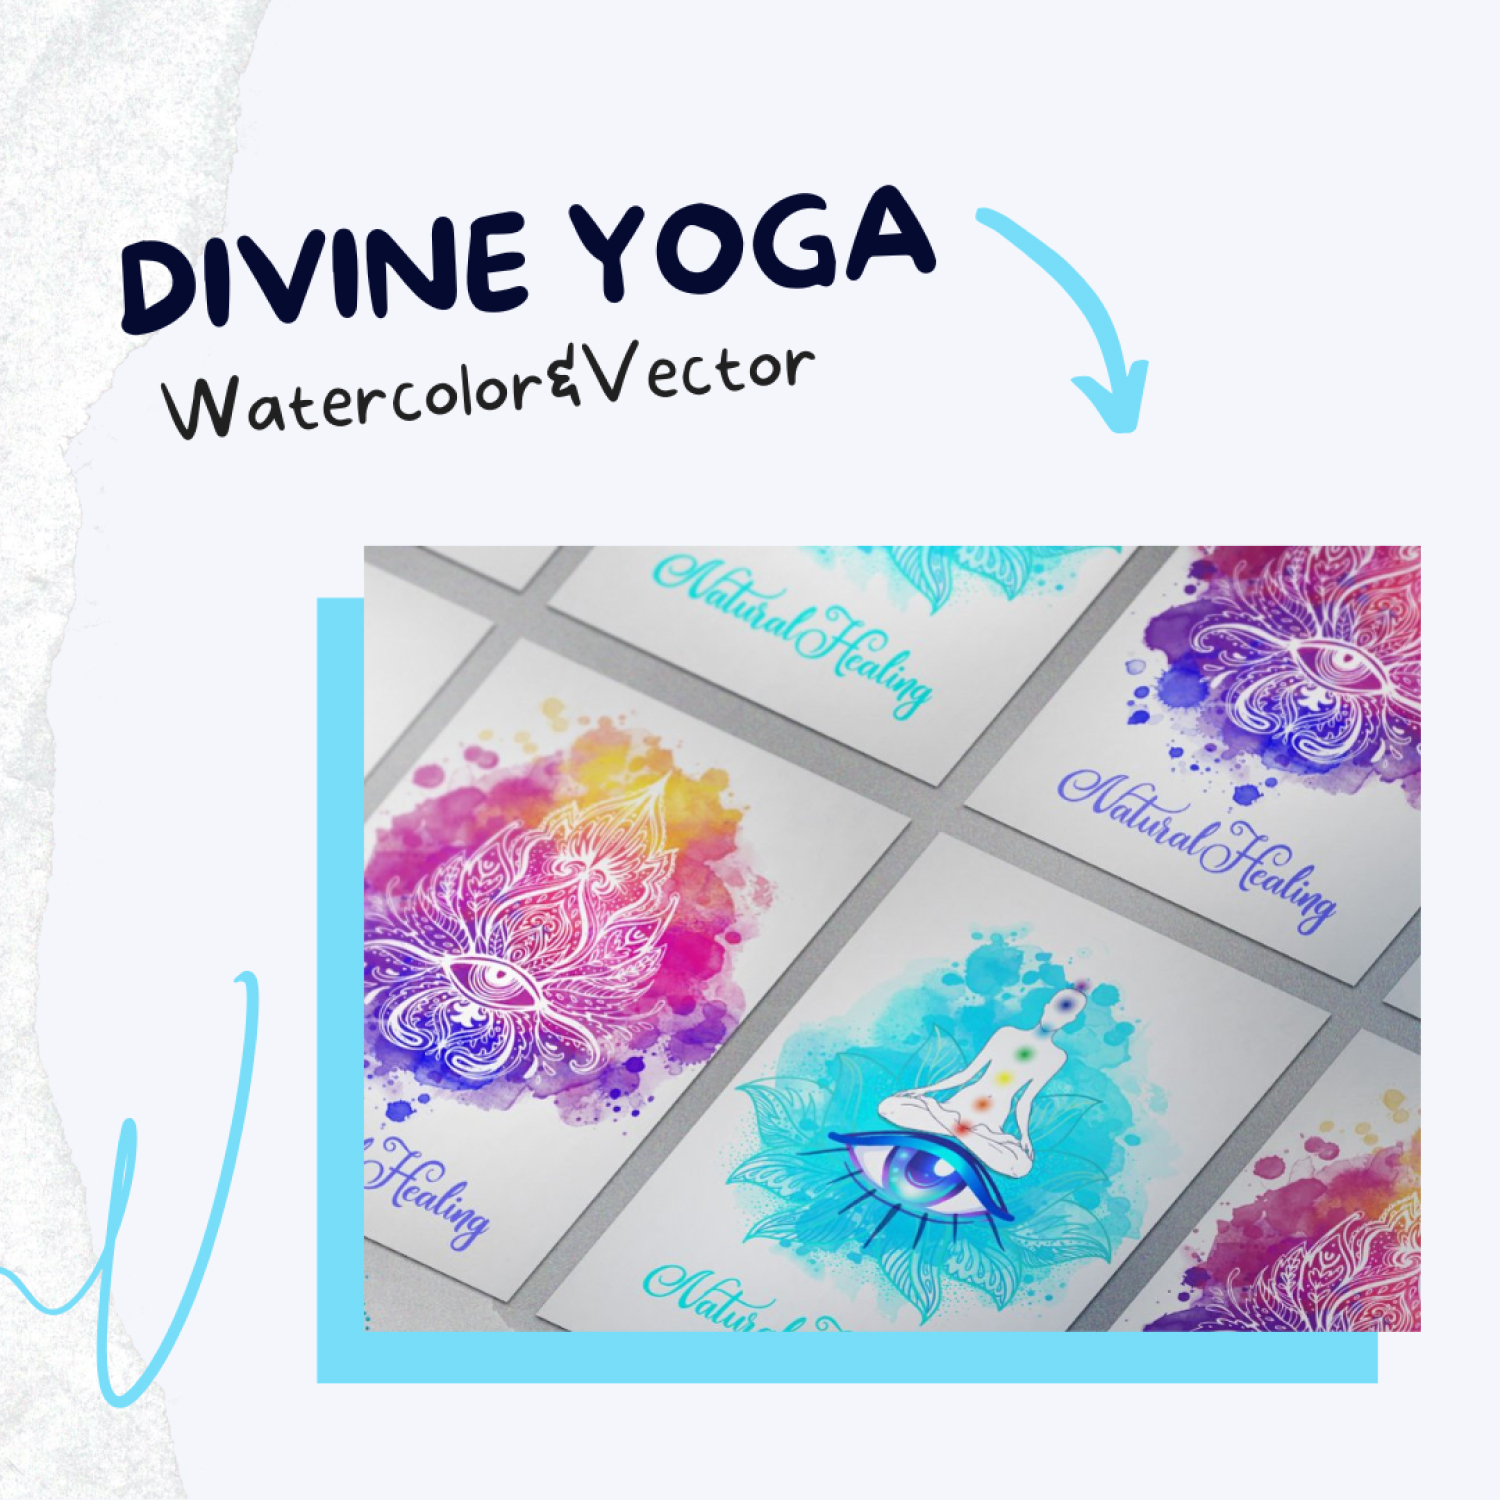 Prints of divine yoga.